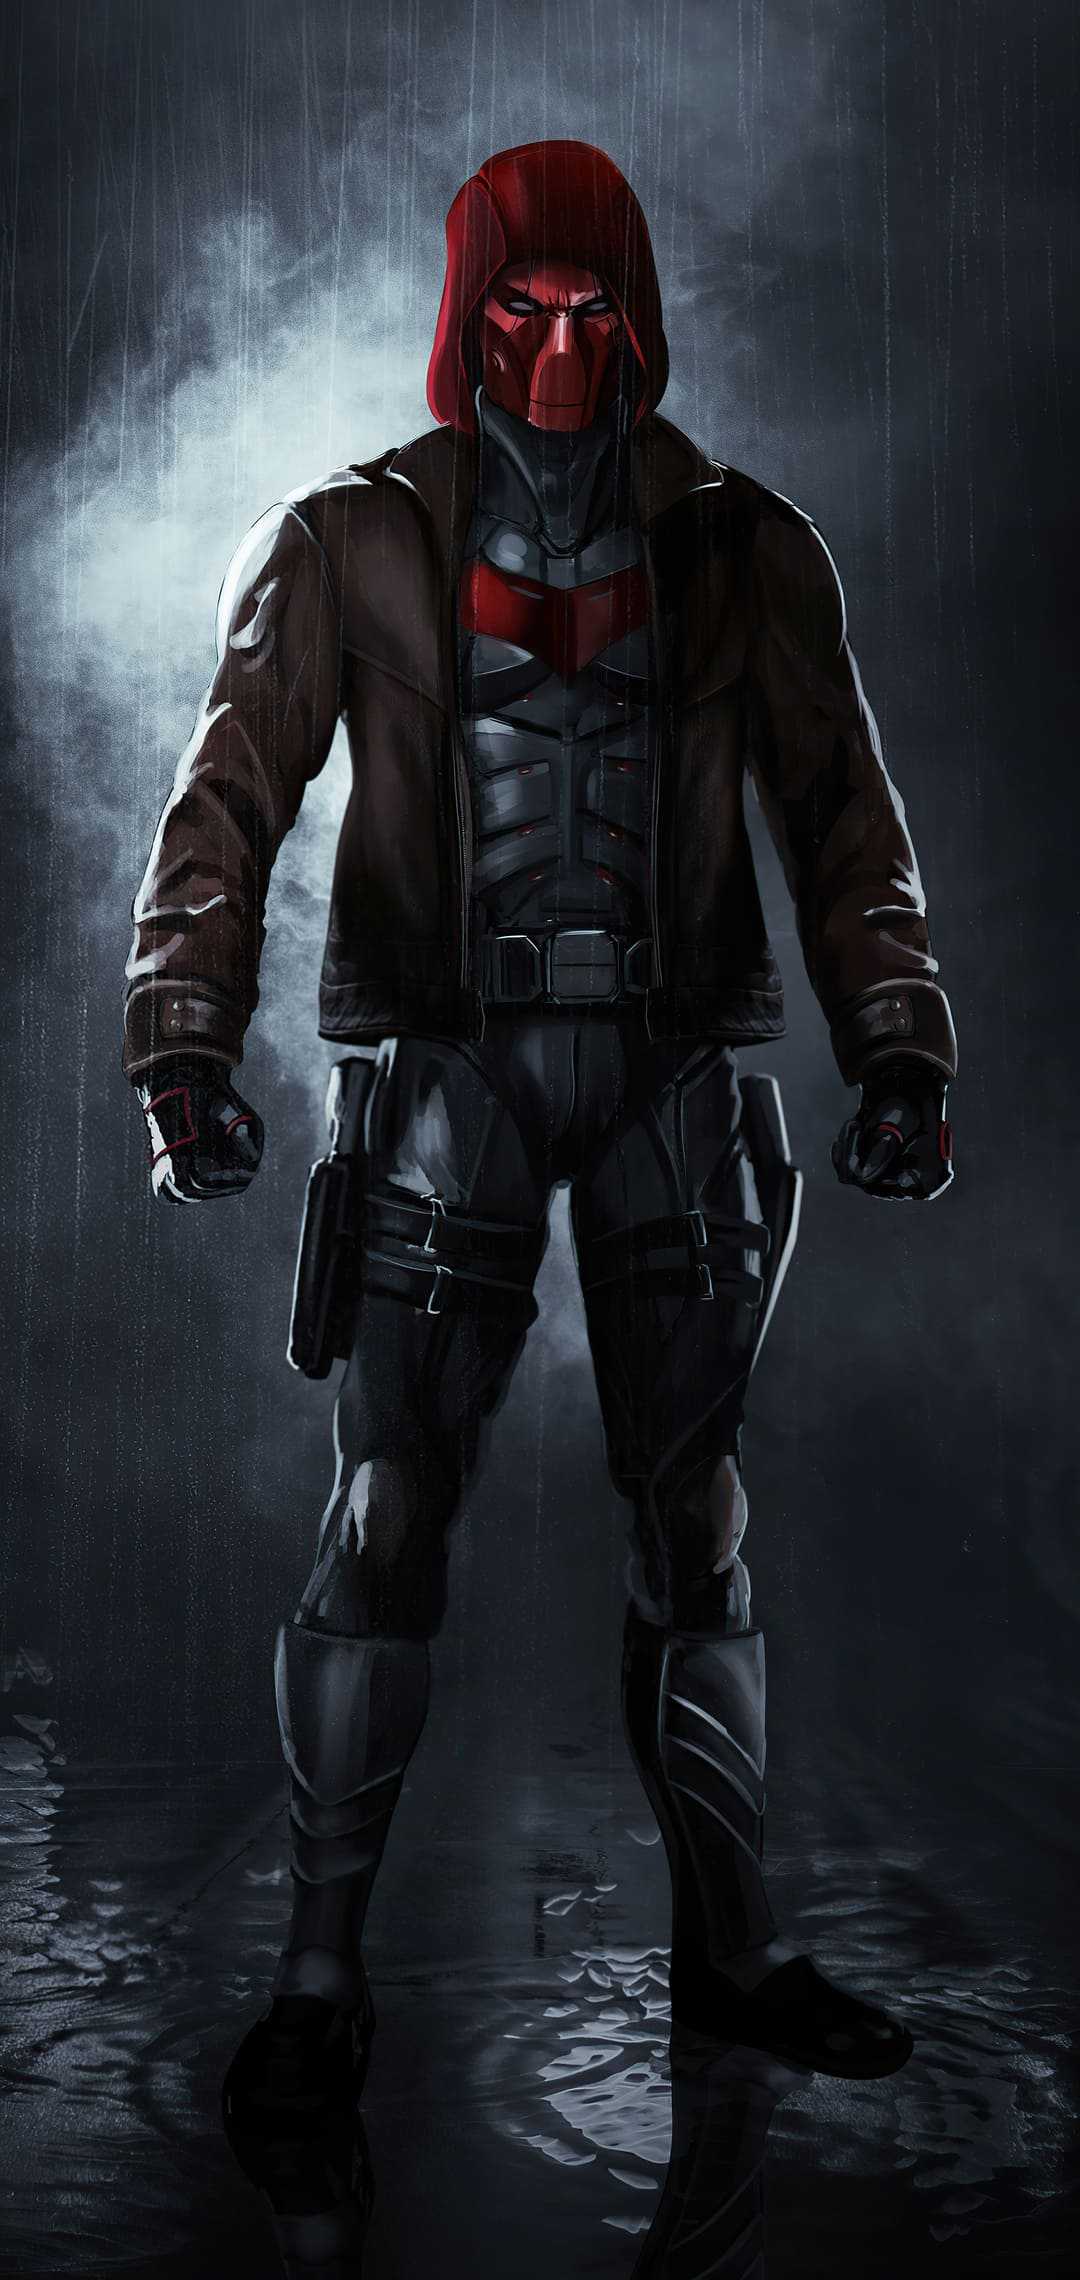 Jason Todd As Red Hood Titans Season 3 Concept Art Wallpapers